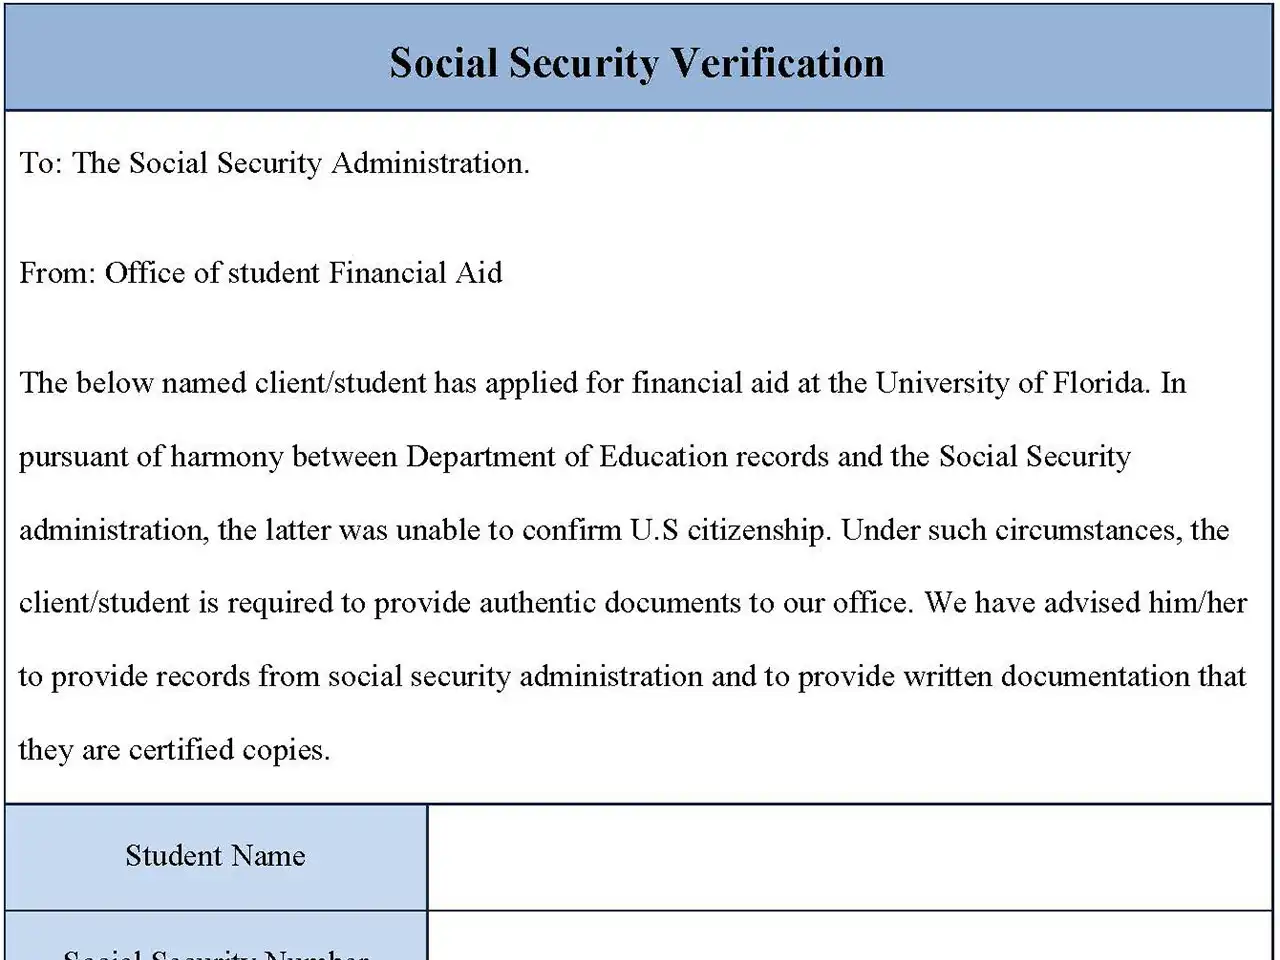 Social Security Verification Form